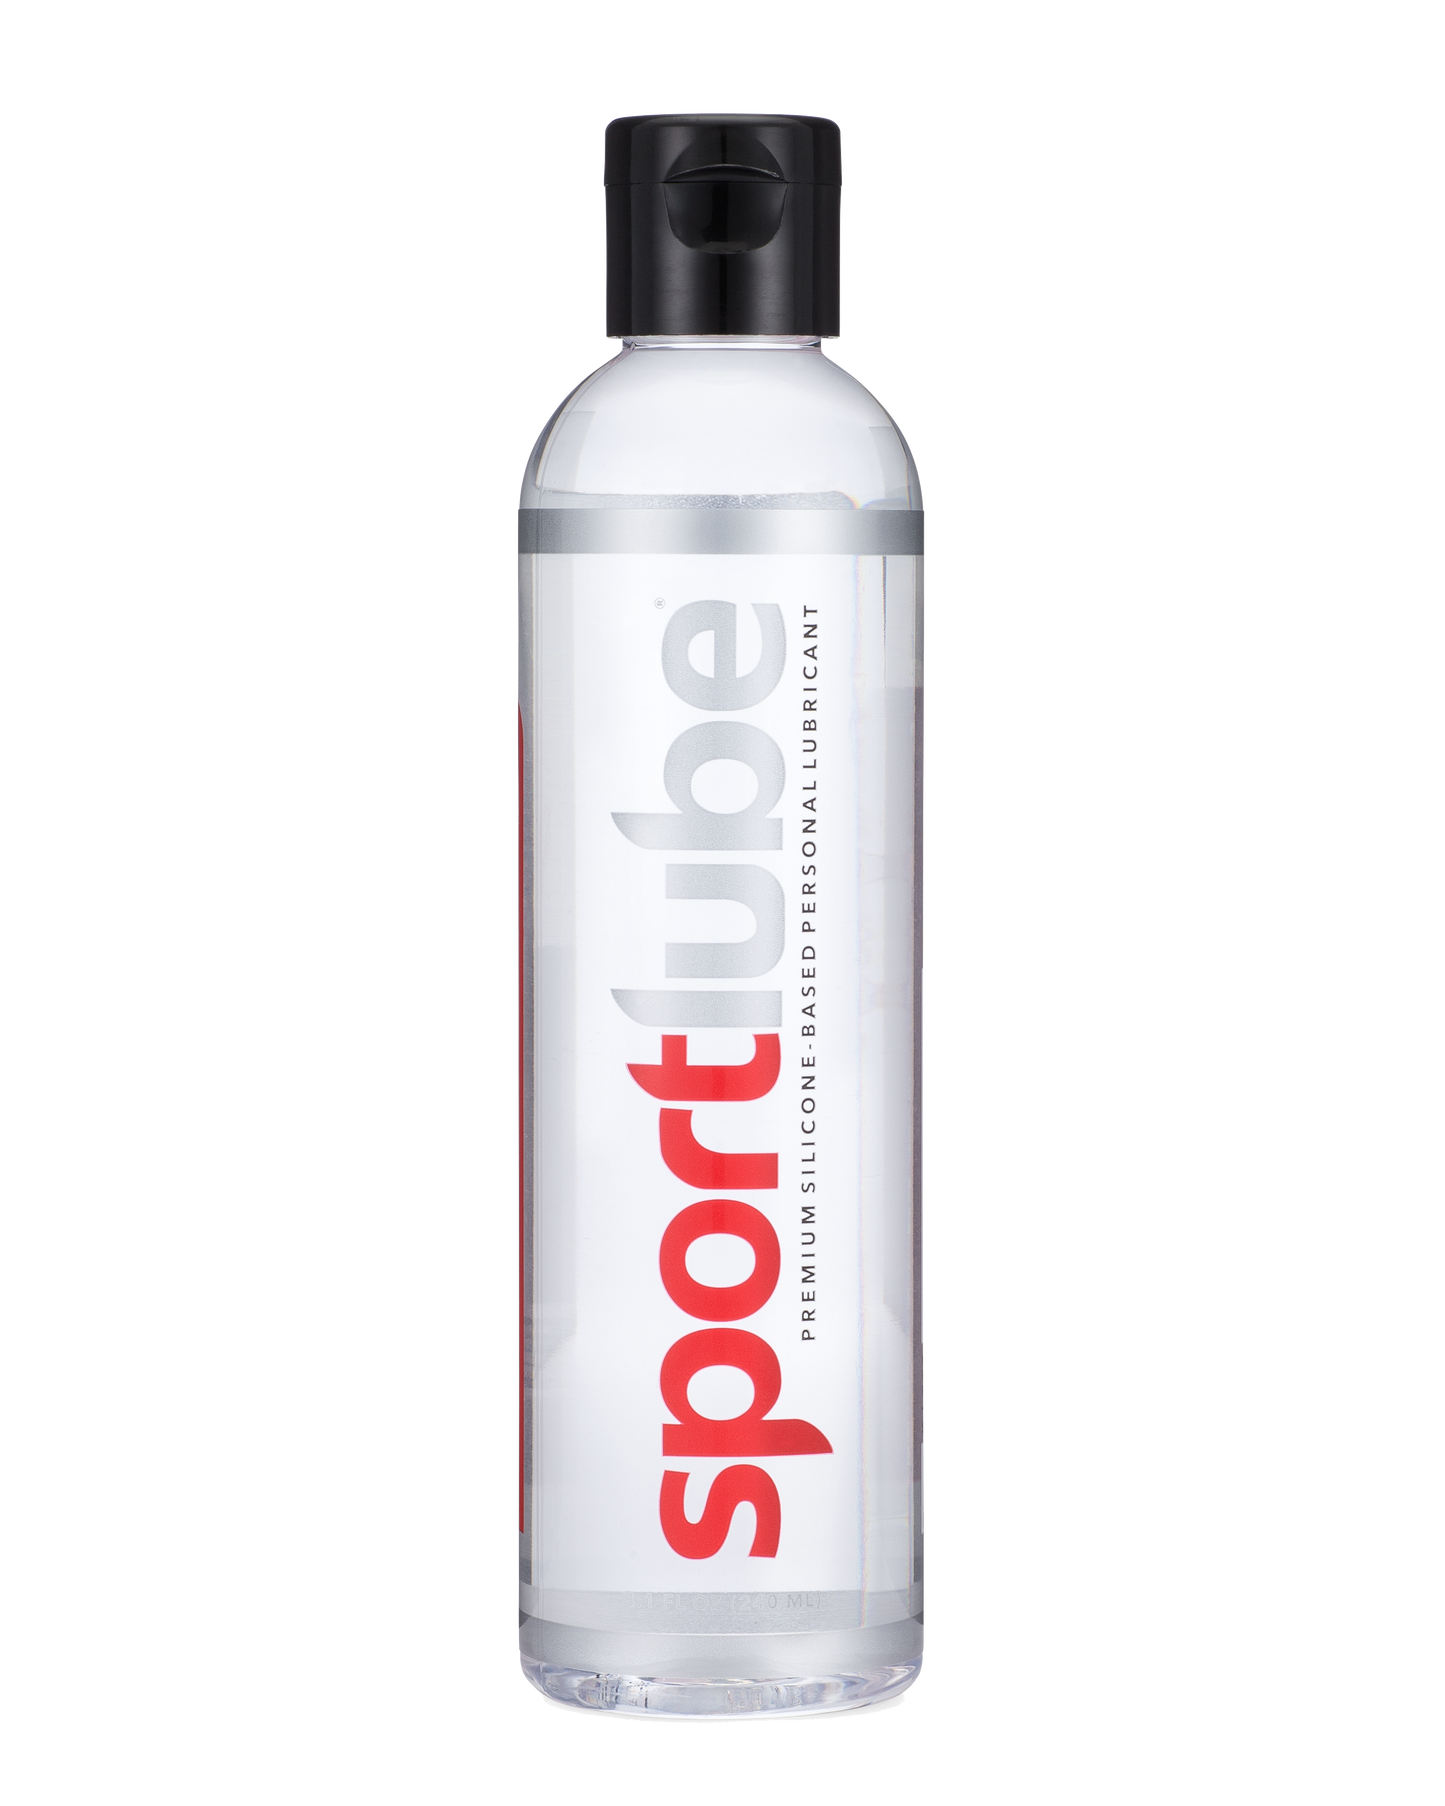 SportLube Premium Silicone-Based Personal Lubricant 8.1 oz (240 ml)